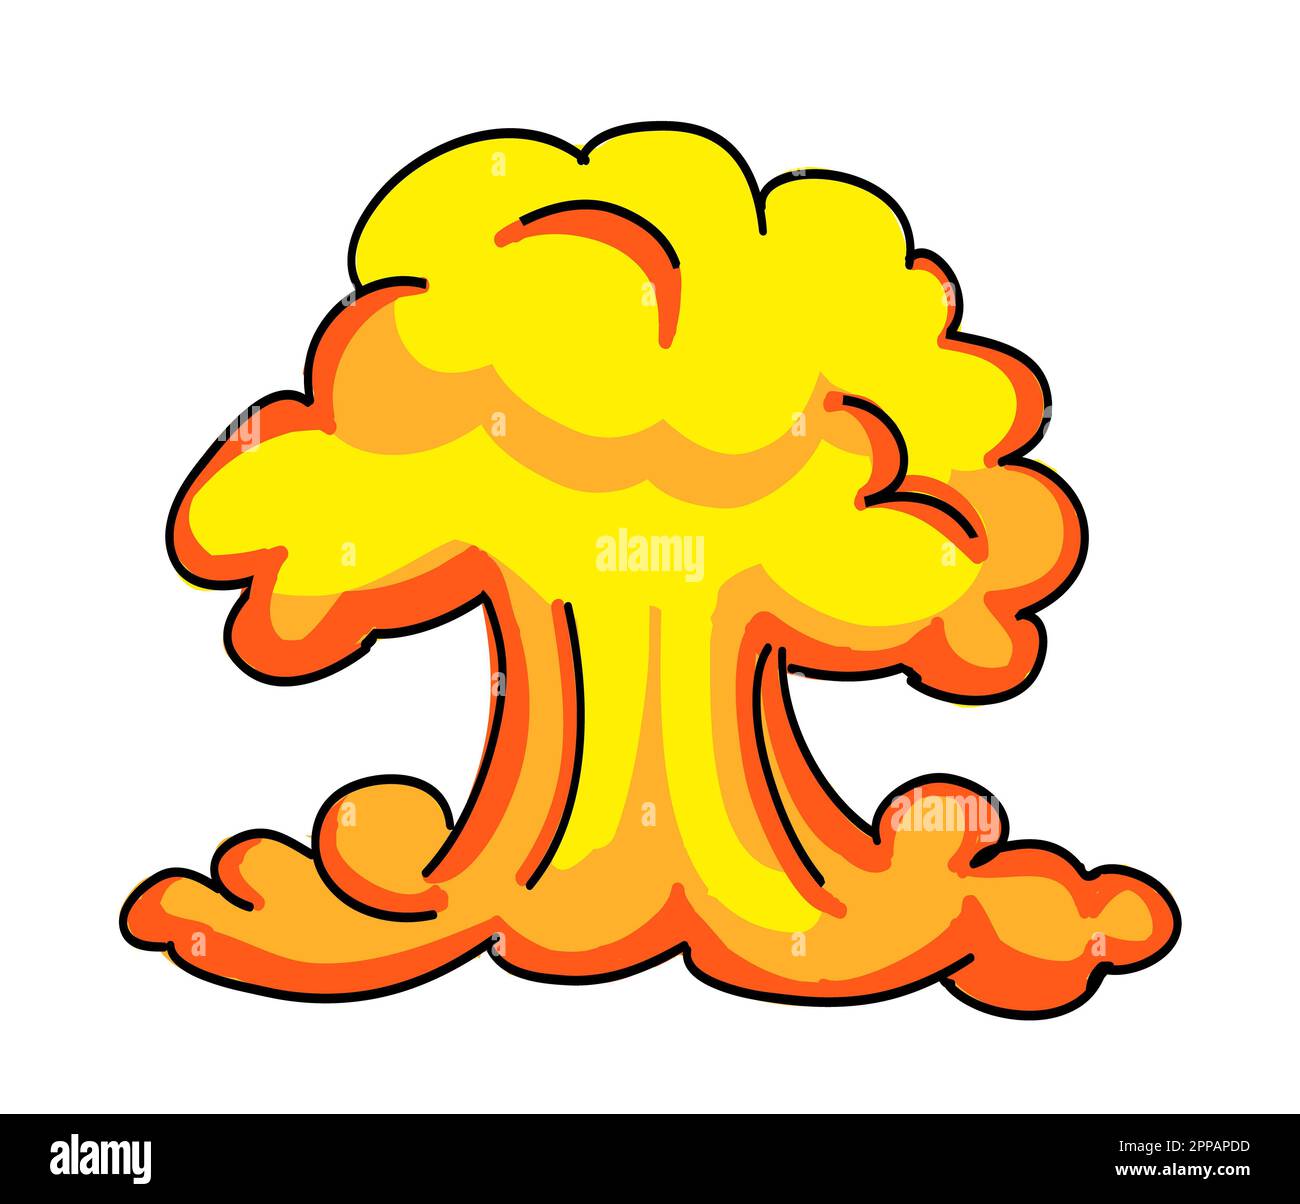 atomic bomb explosion cartoon